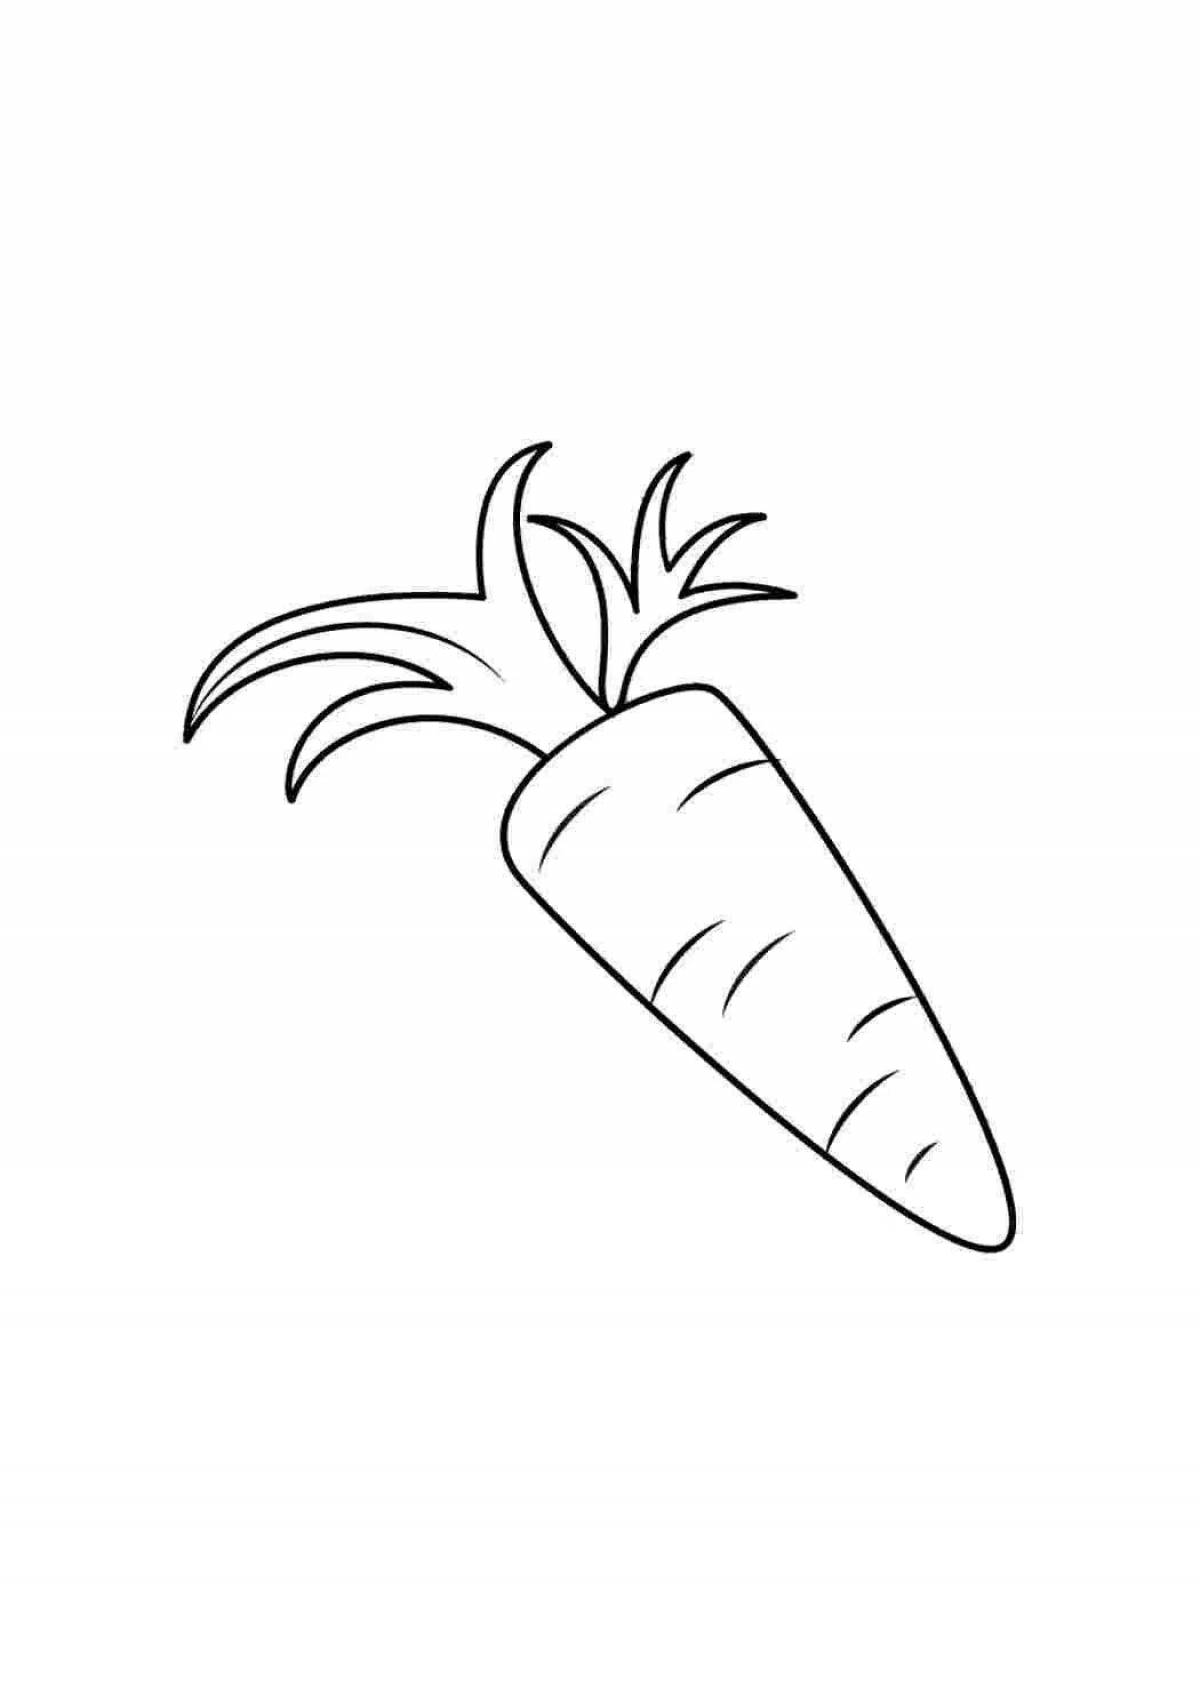 Креативный рисунок моркови для детей